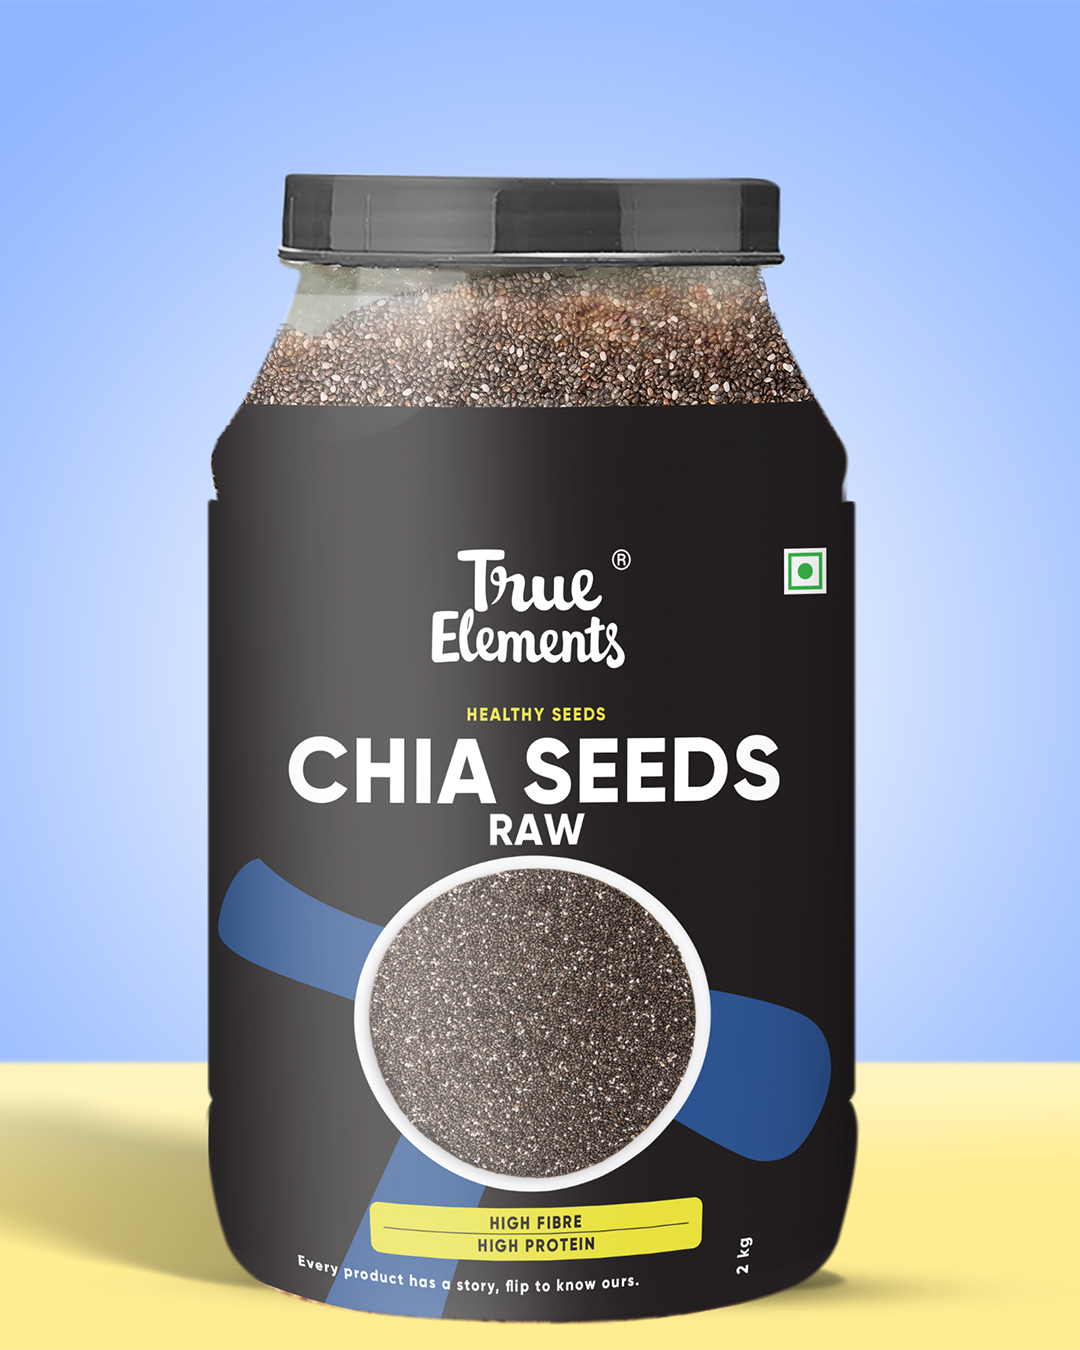 True elements raw chia seeds 2kg box (Premium Whole Seeds)